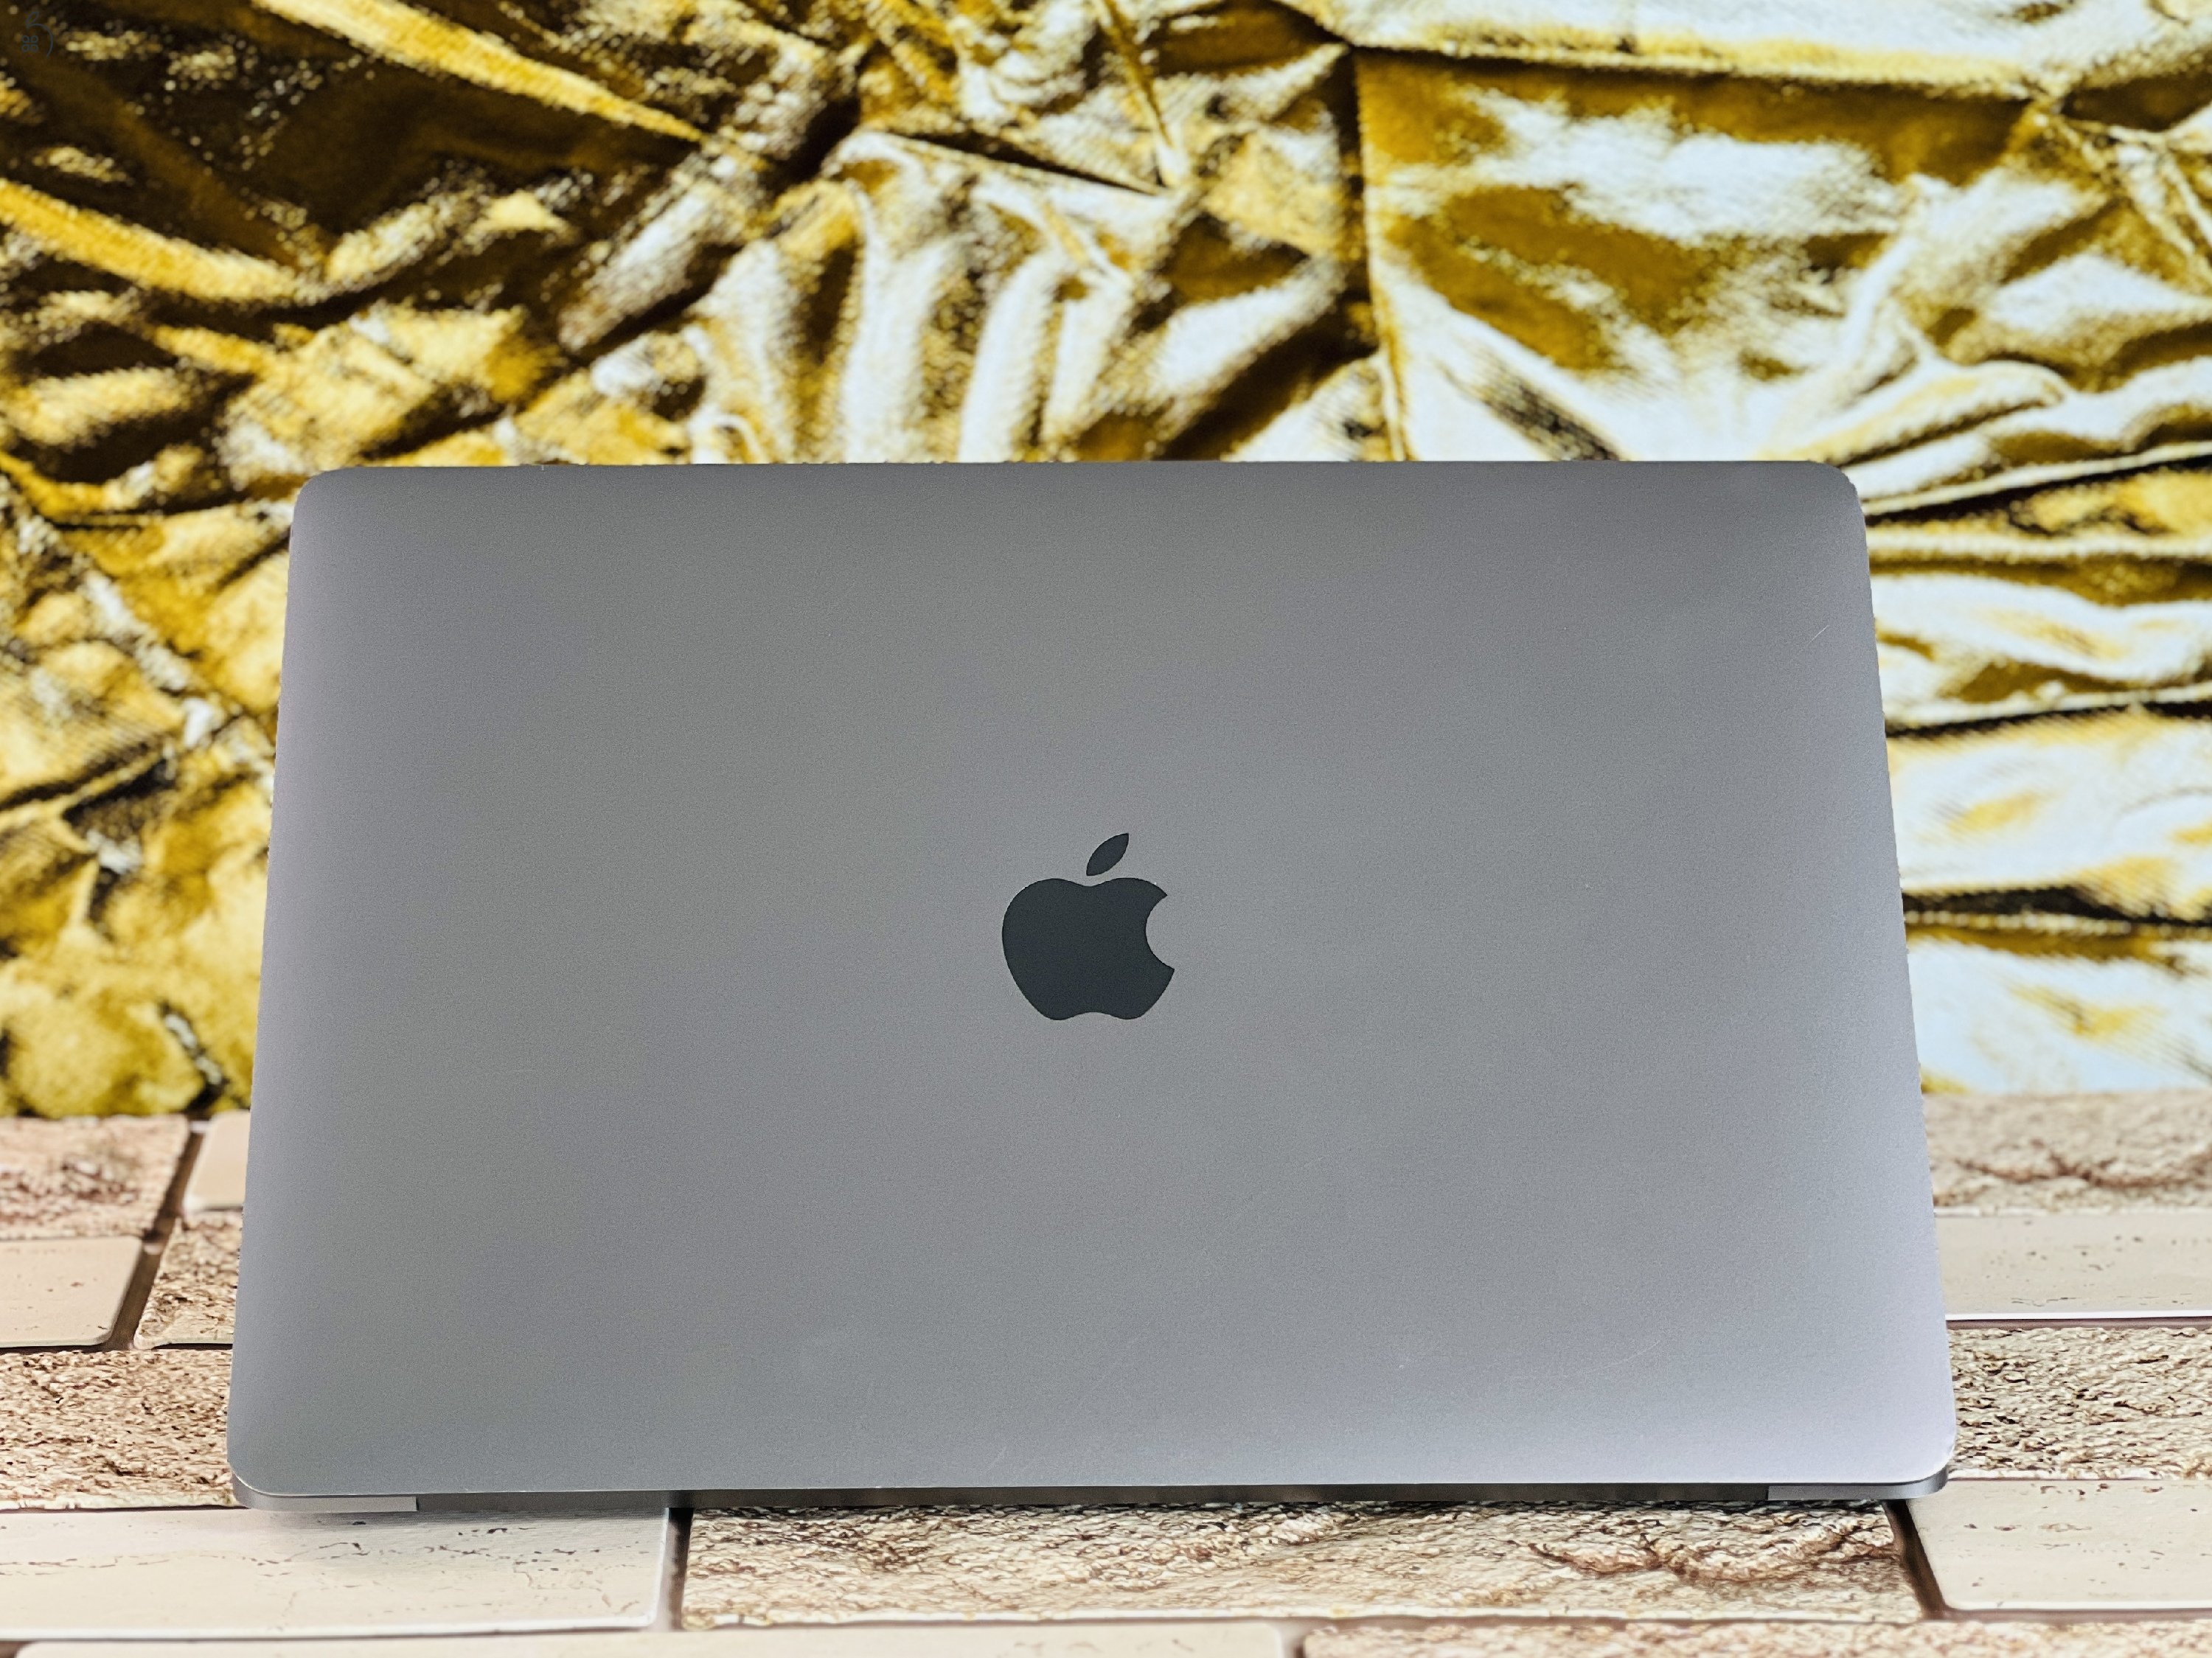 Eladó Apple Macbook Air 256 GB Space Gray 2020 13 M1 8 GB SSD - S1461